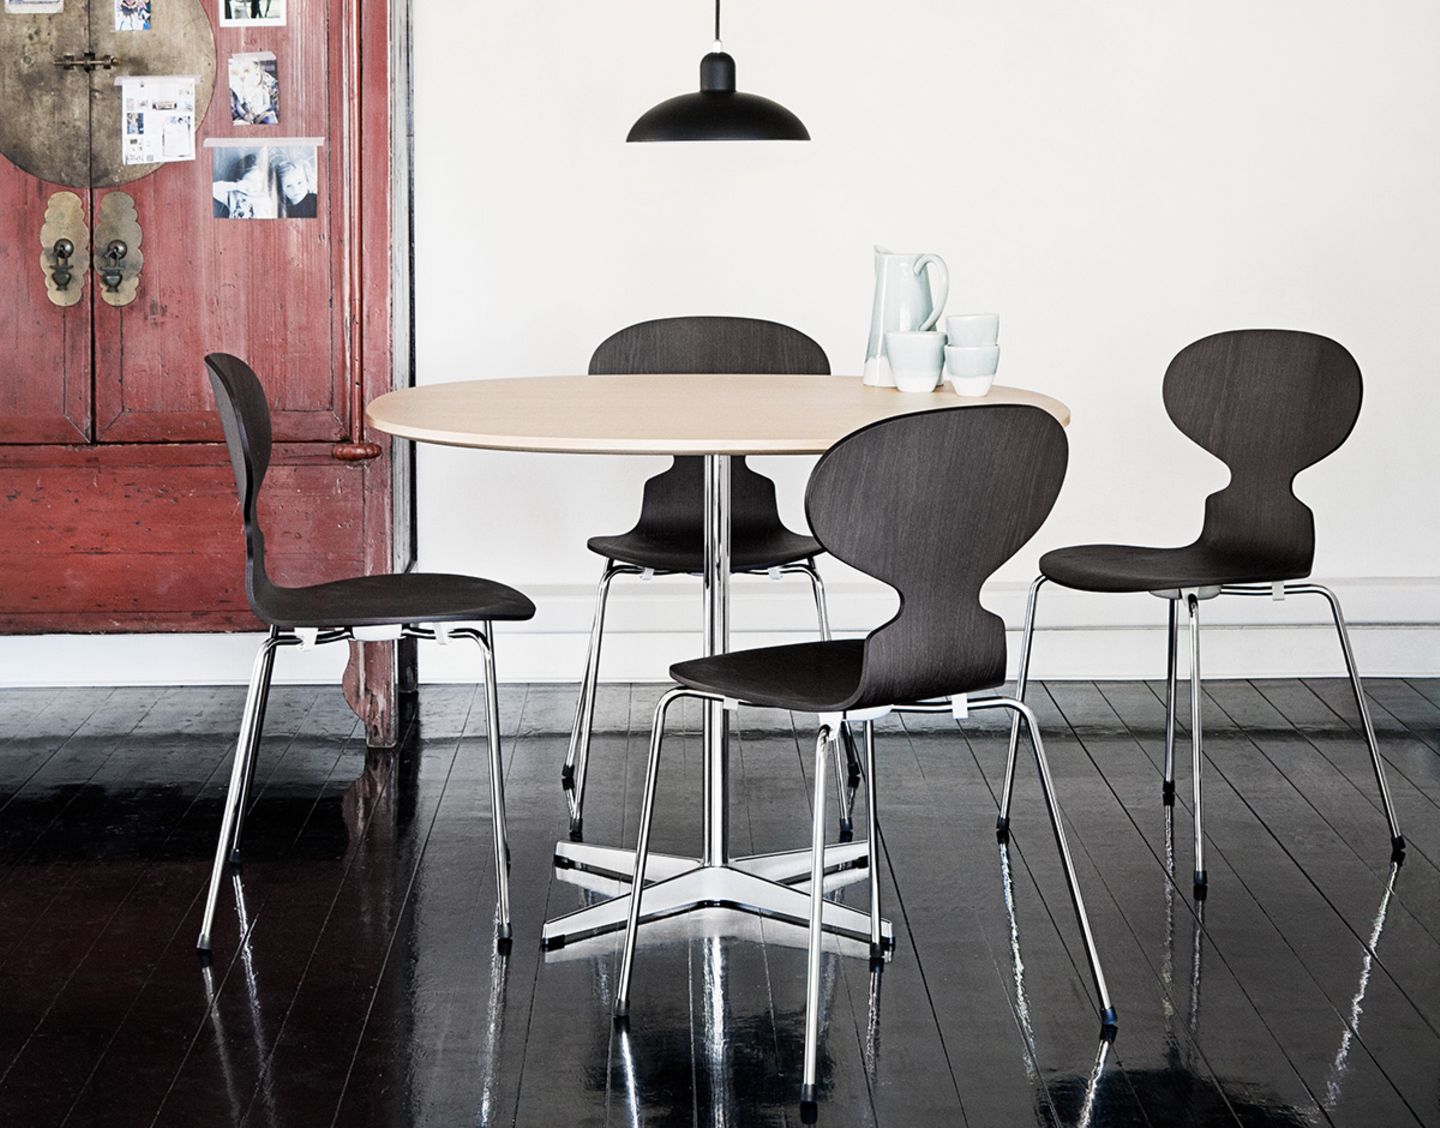 Stuhl "Ameise", Arne Jacobsen